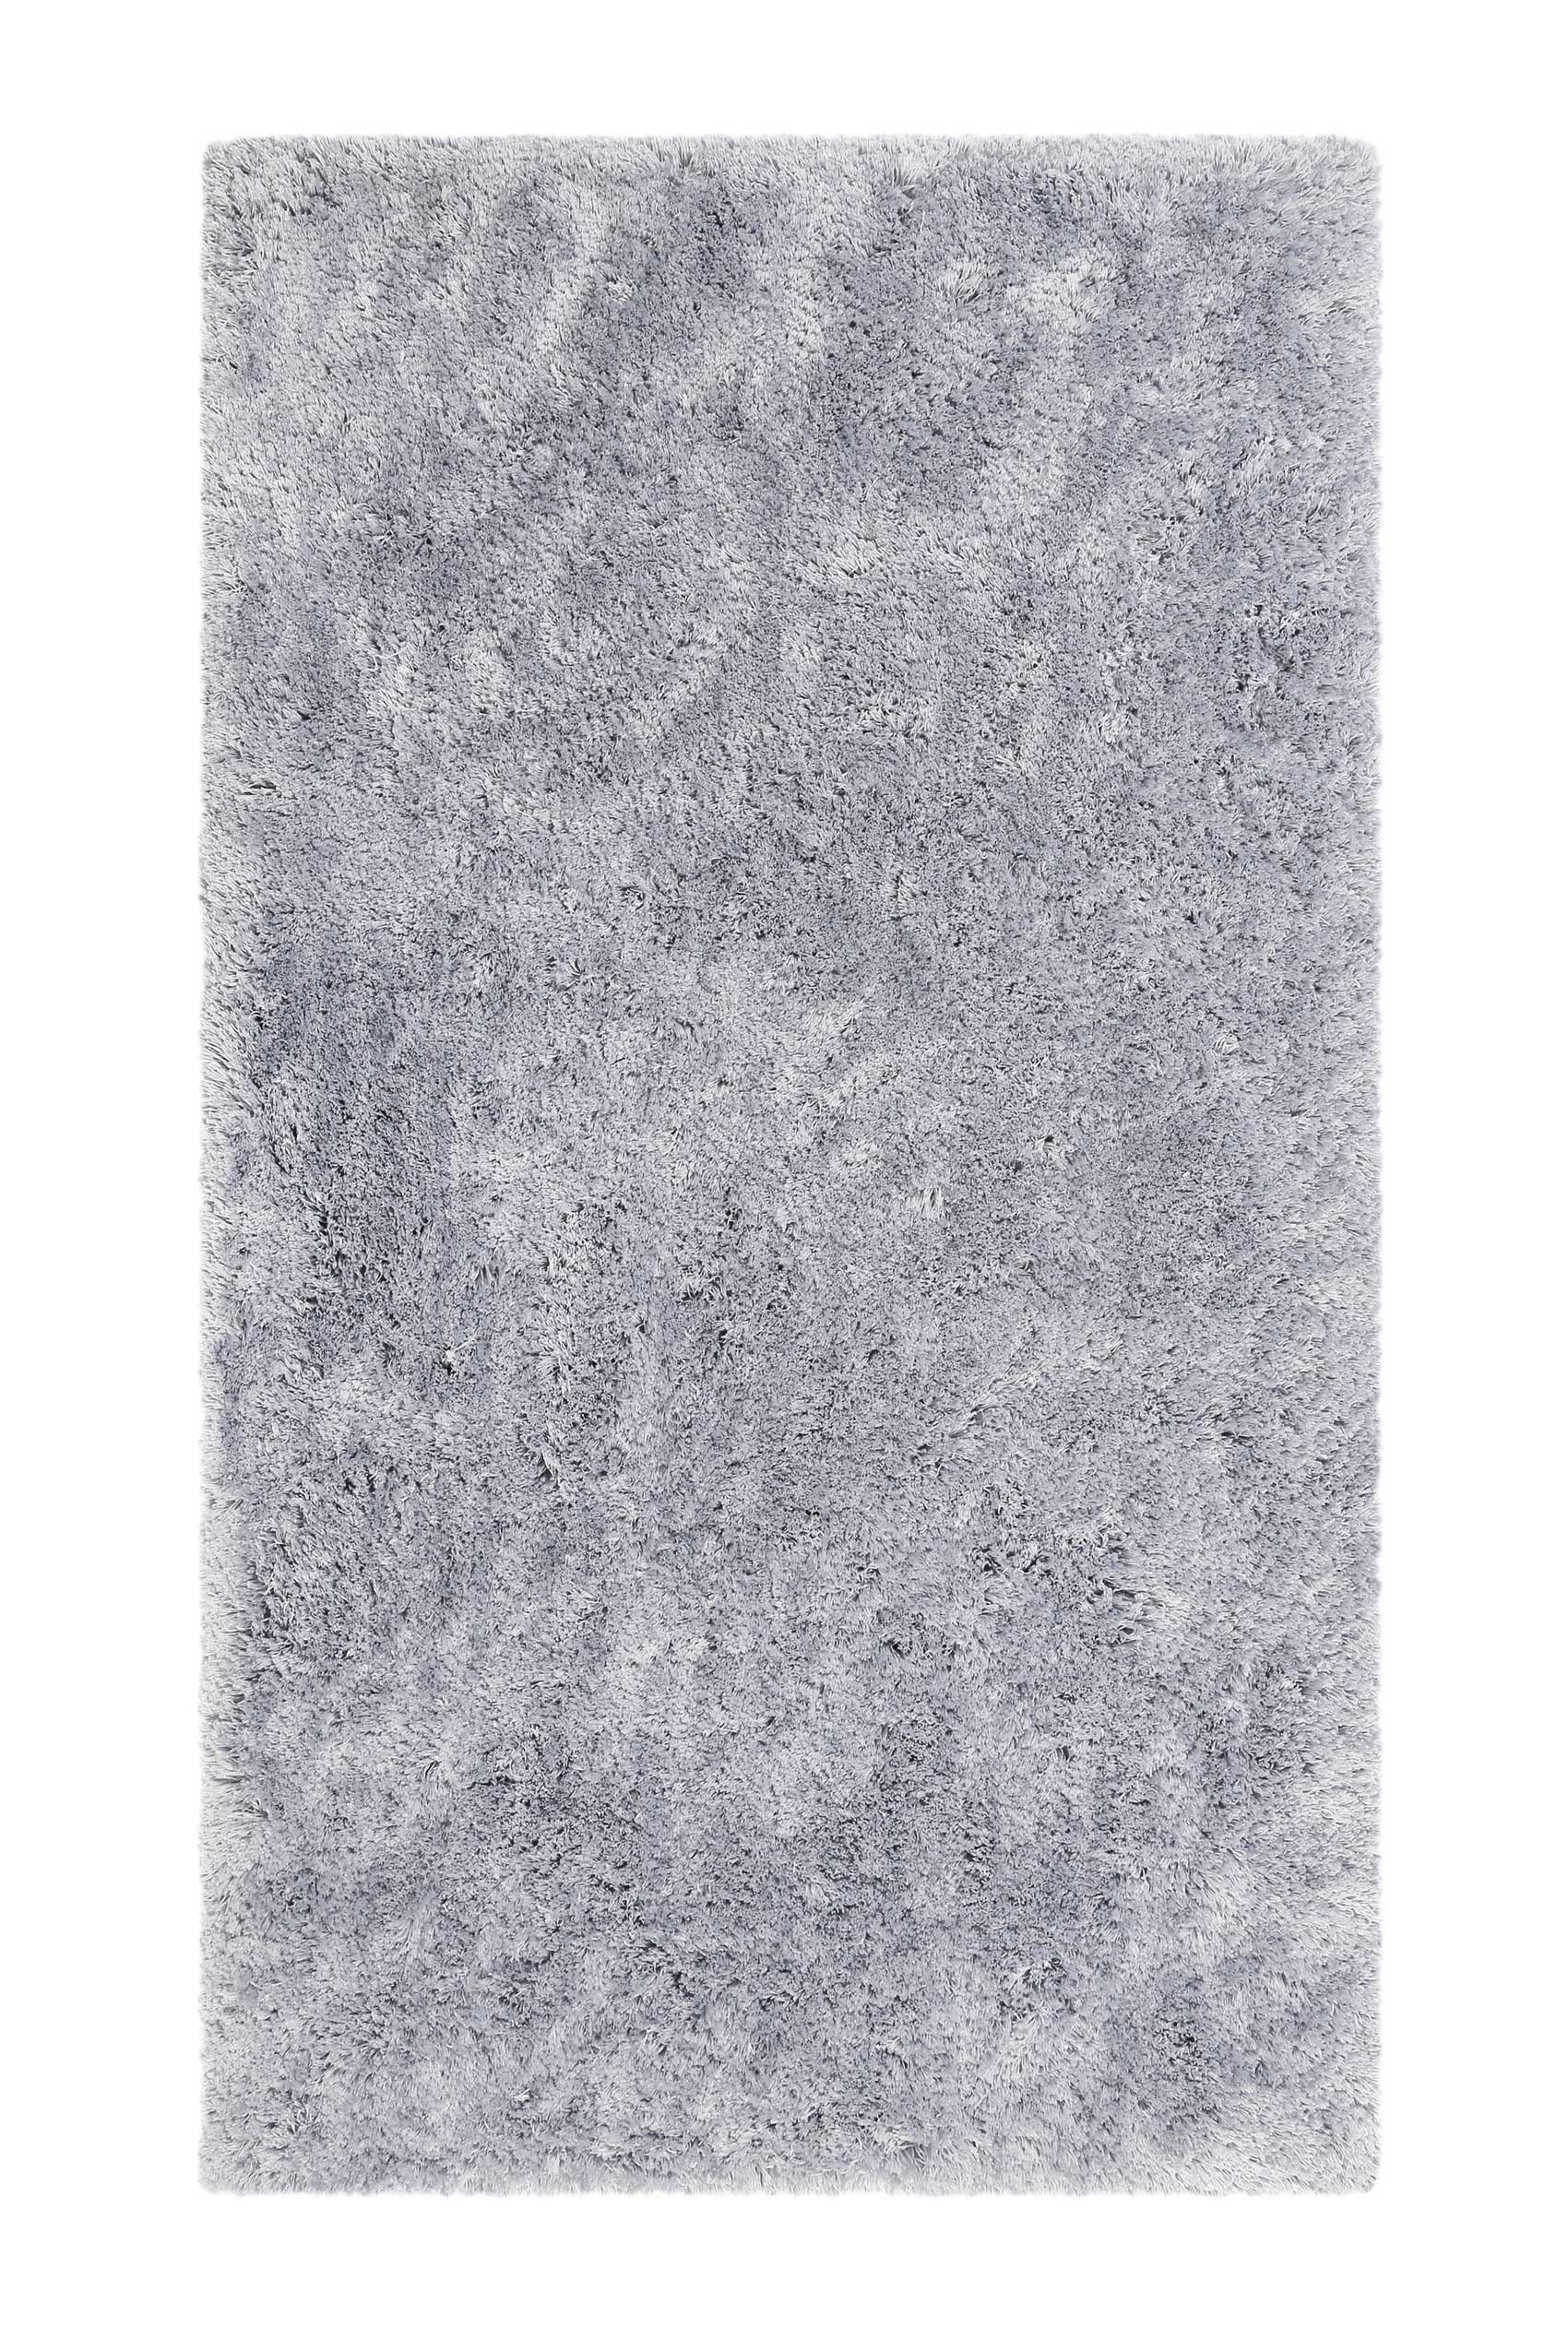 tapis de bain microfibre antidérapant gris clair 55x65